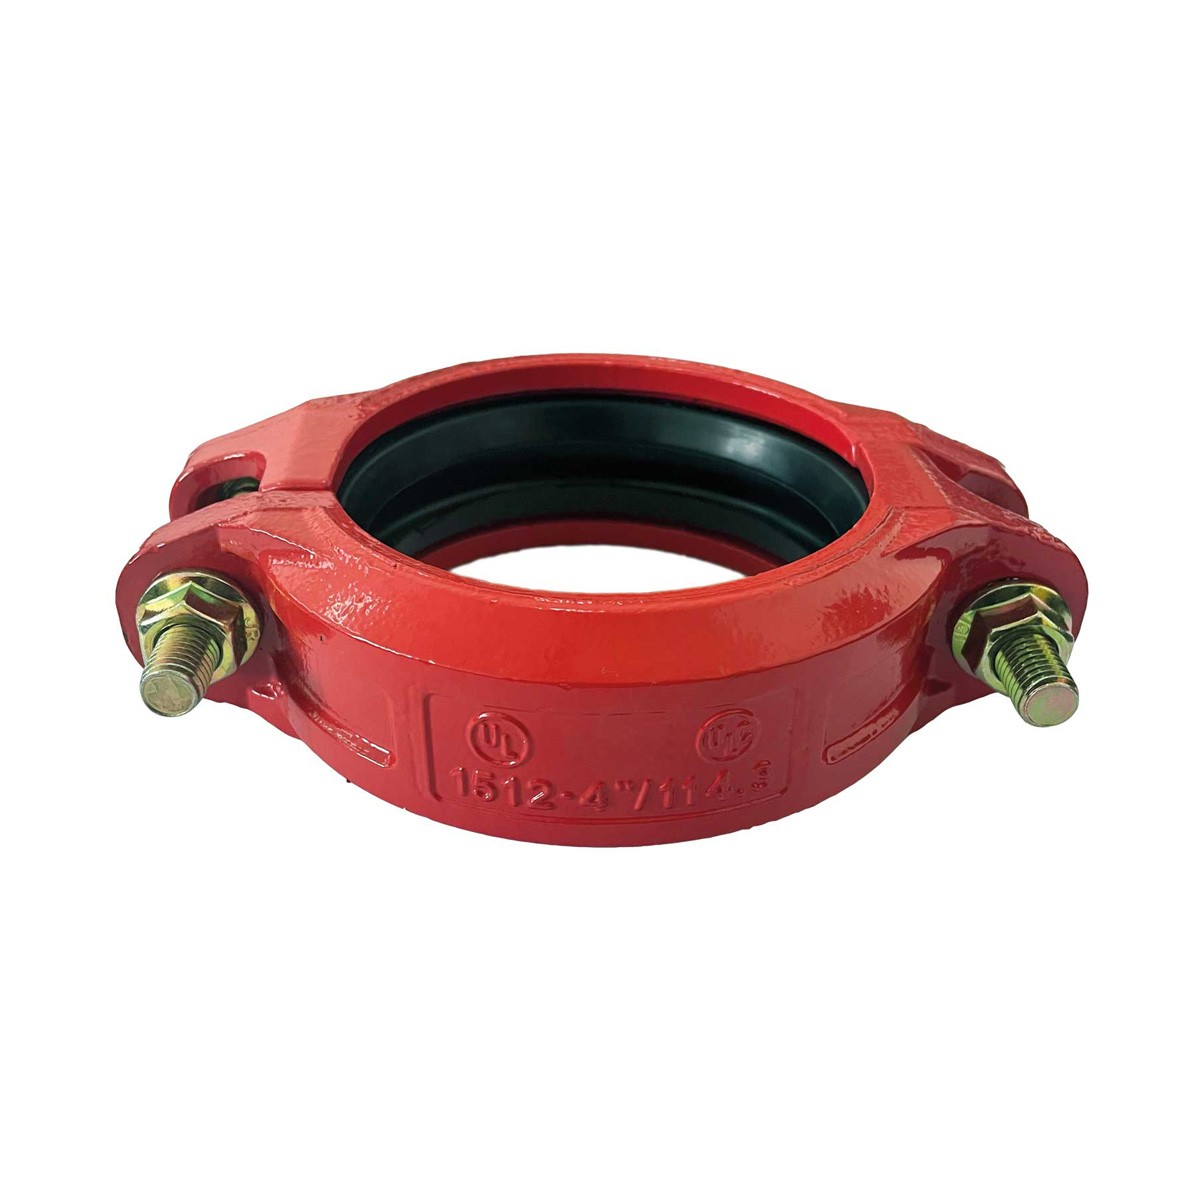 INTERSCHUTZ Product 2022: Wet alarm valve Flanged with trim (Piping  Logistics)